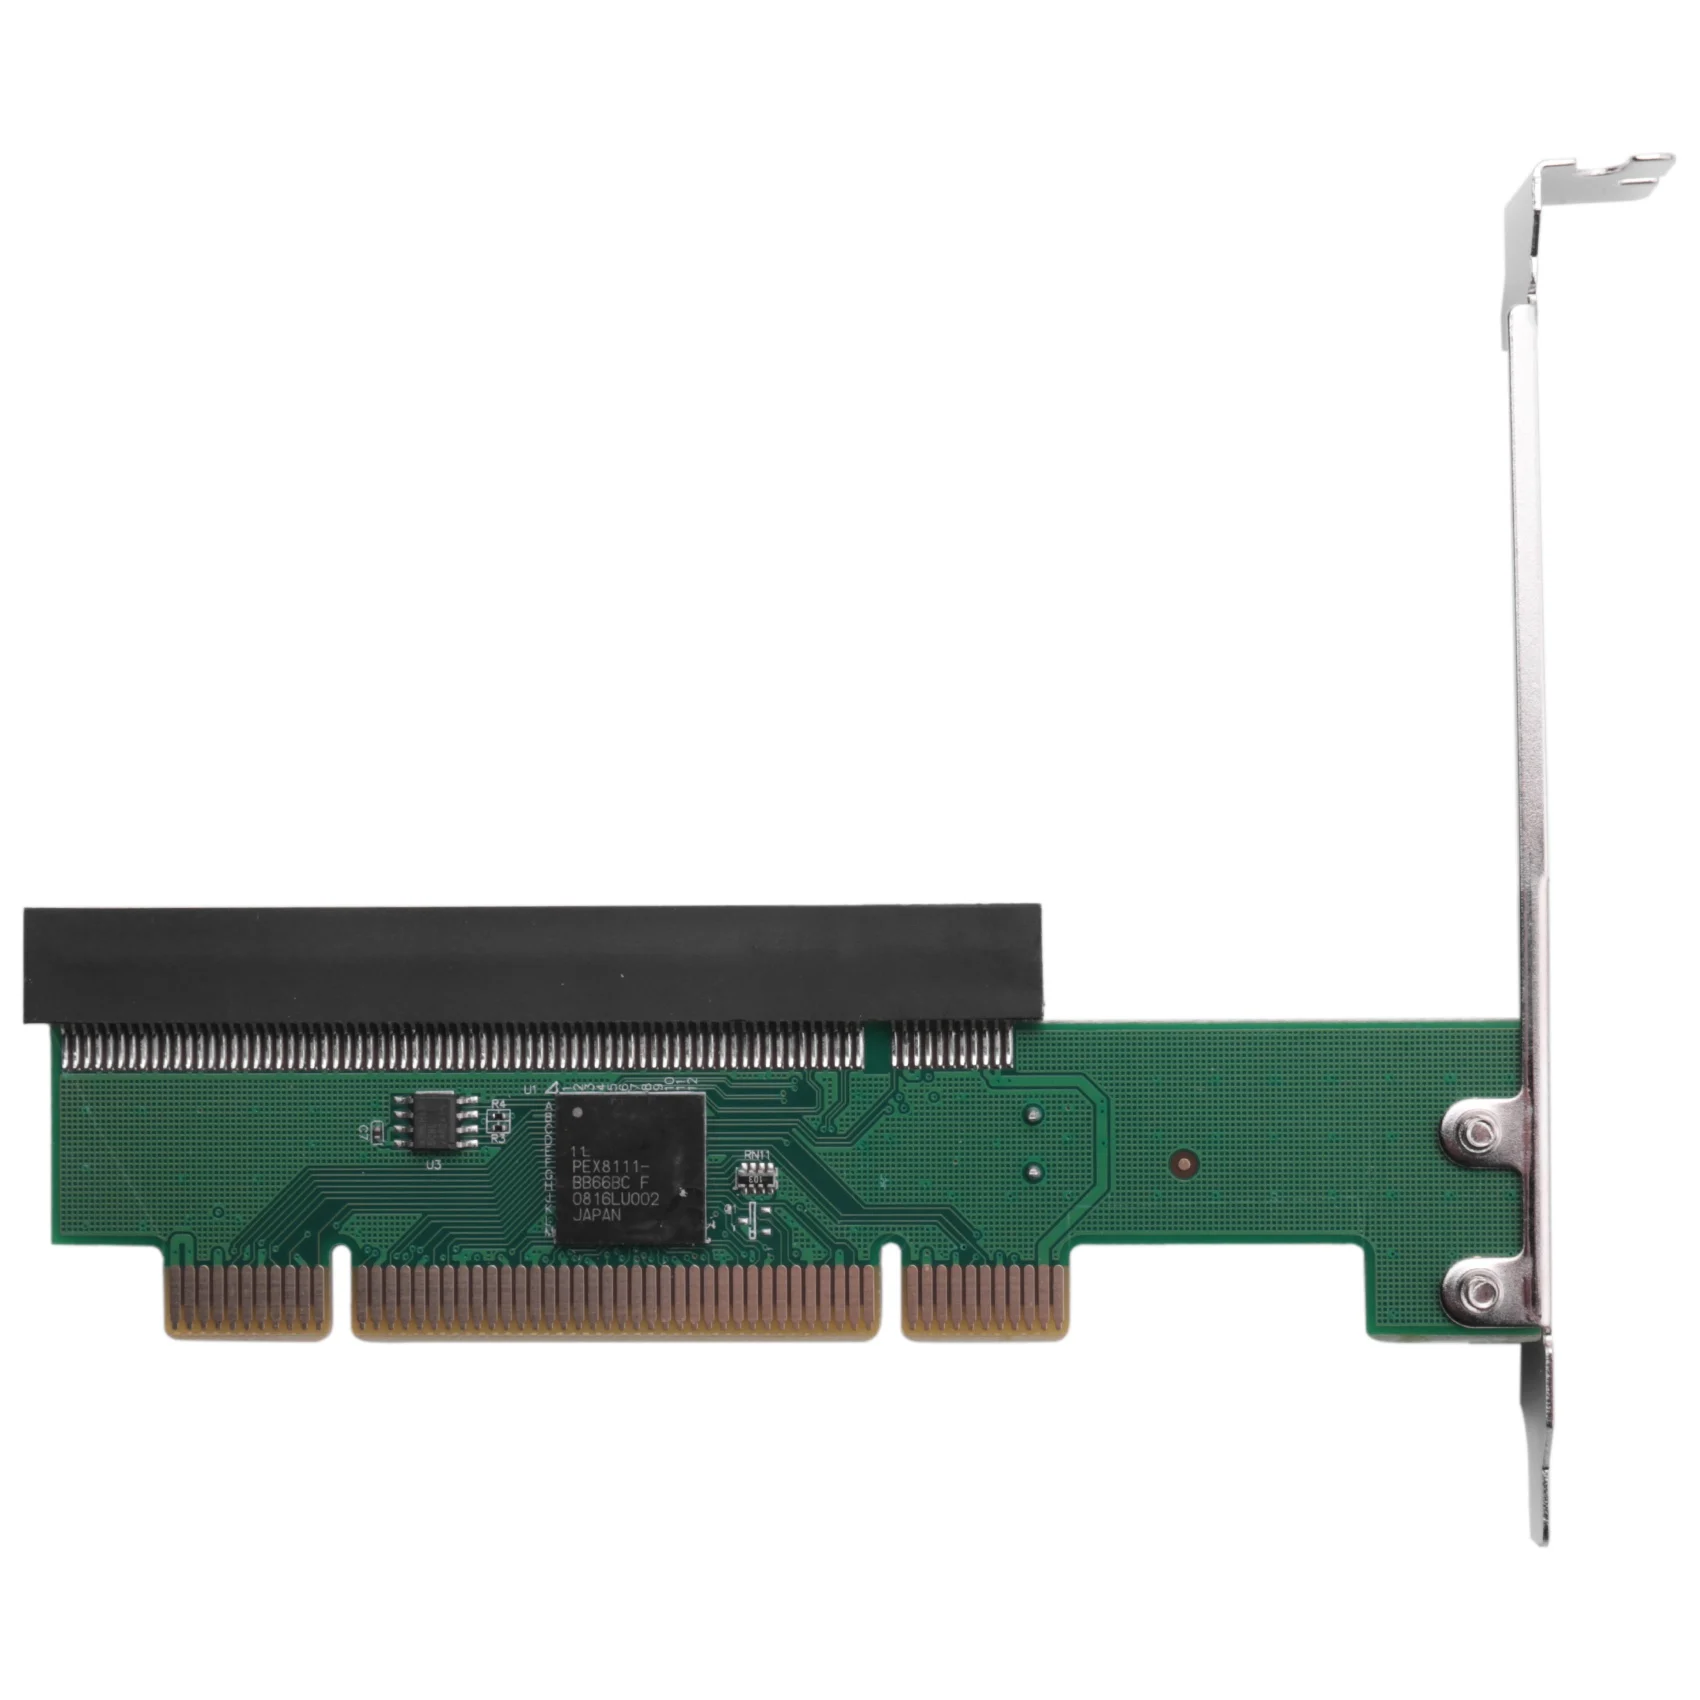 Адаптер платы преобразования PCI в PCI Express X16 PXE8112 платы расширения моста PCI-E PCI-PCI в PCI